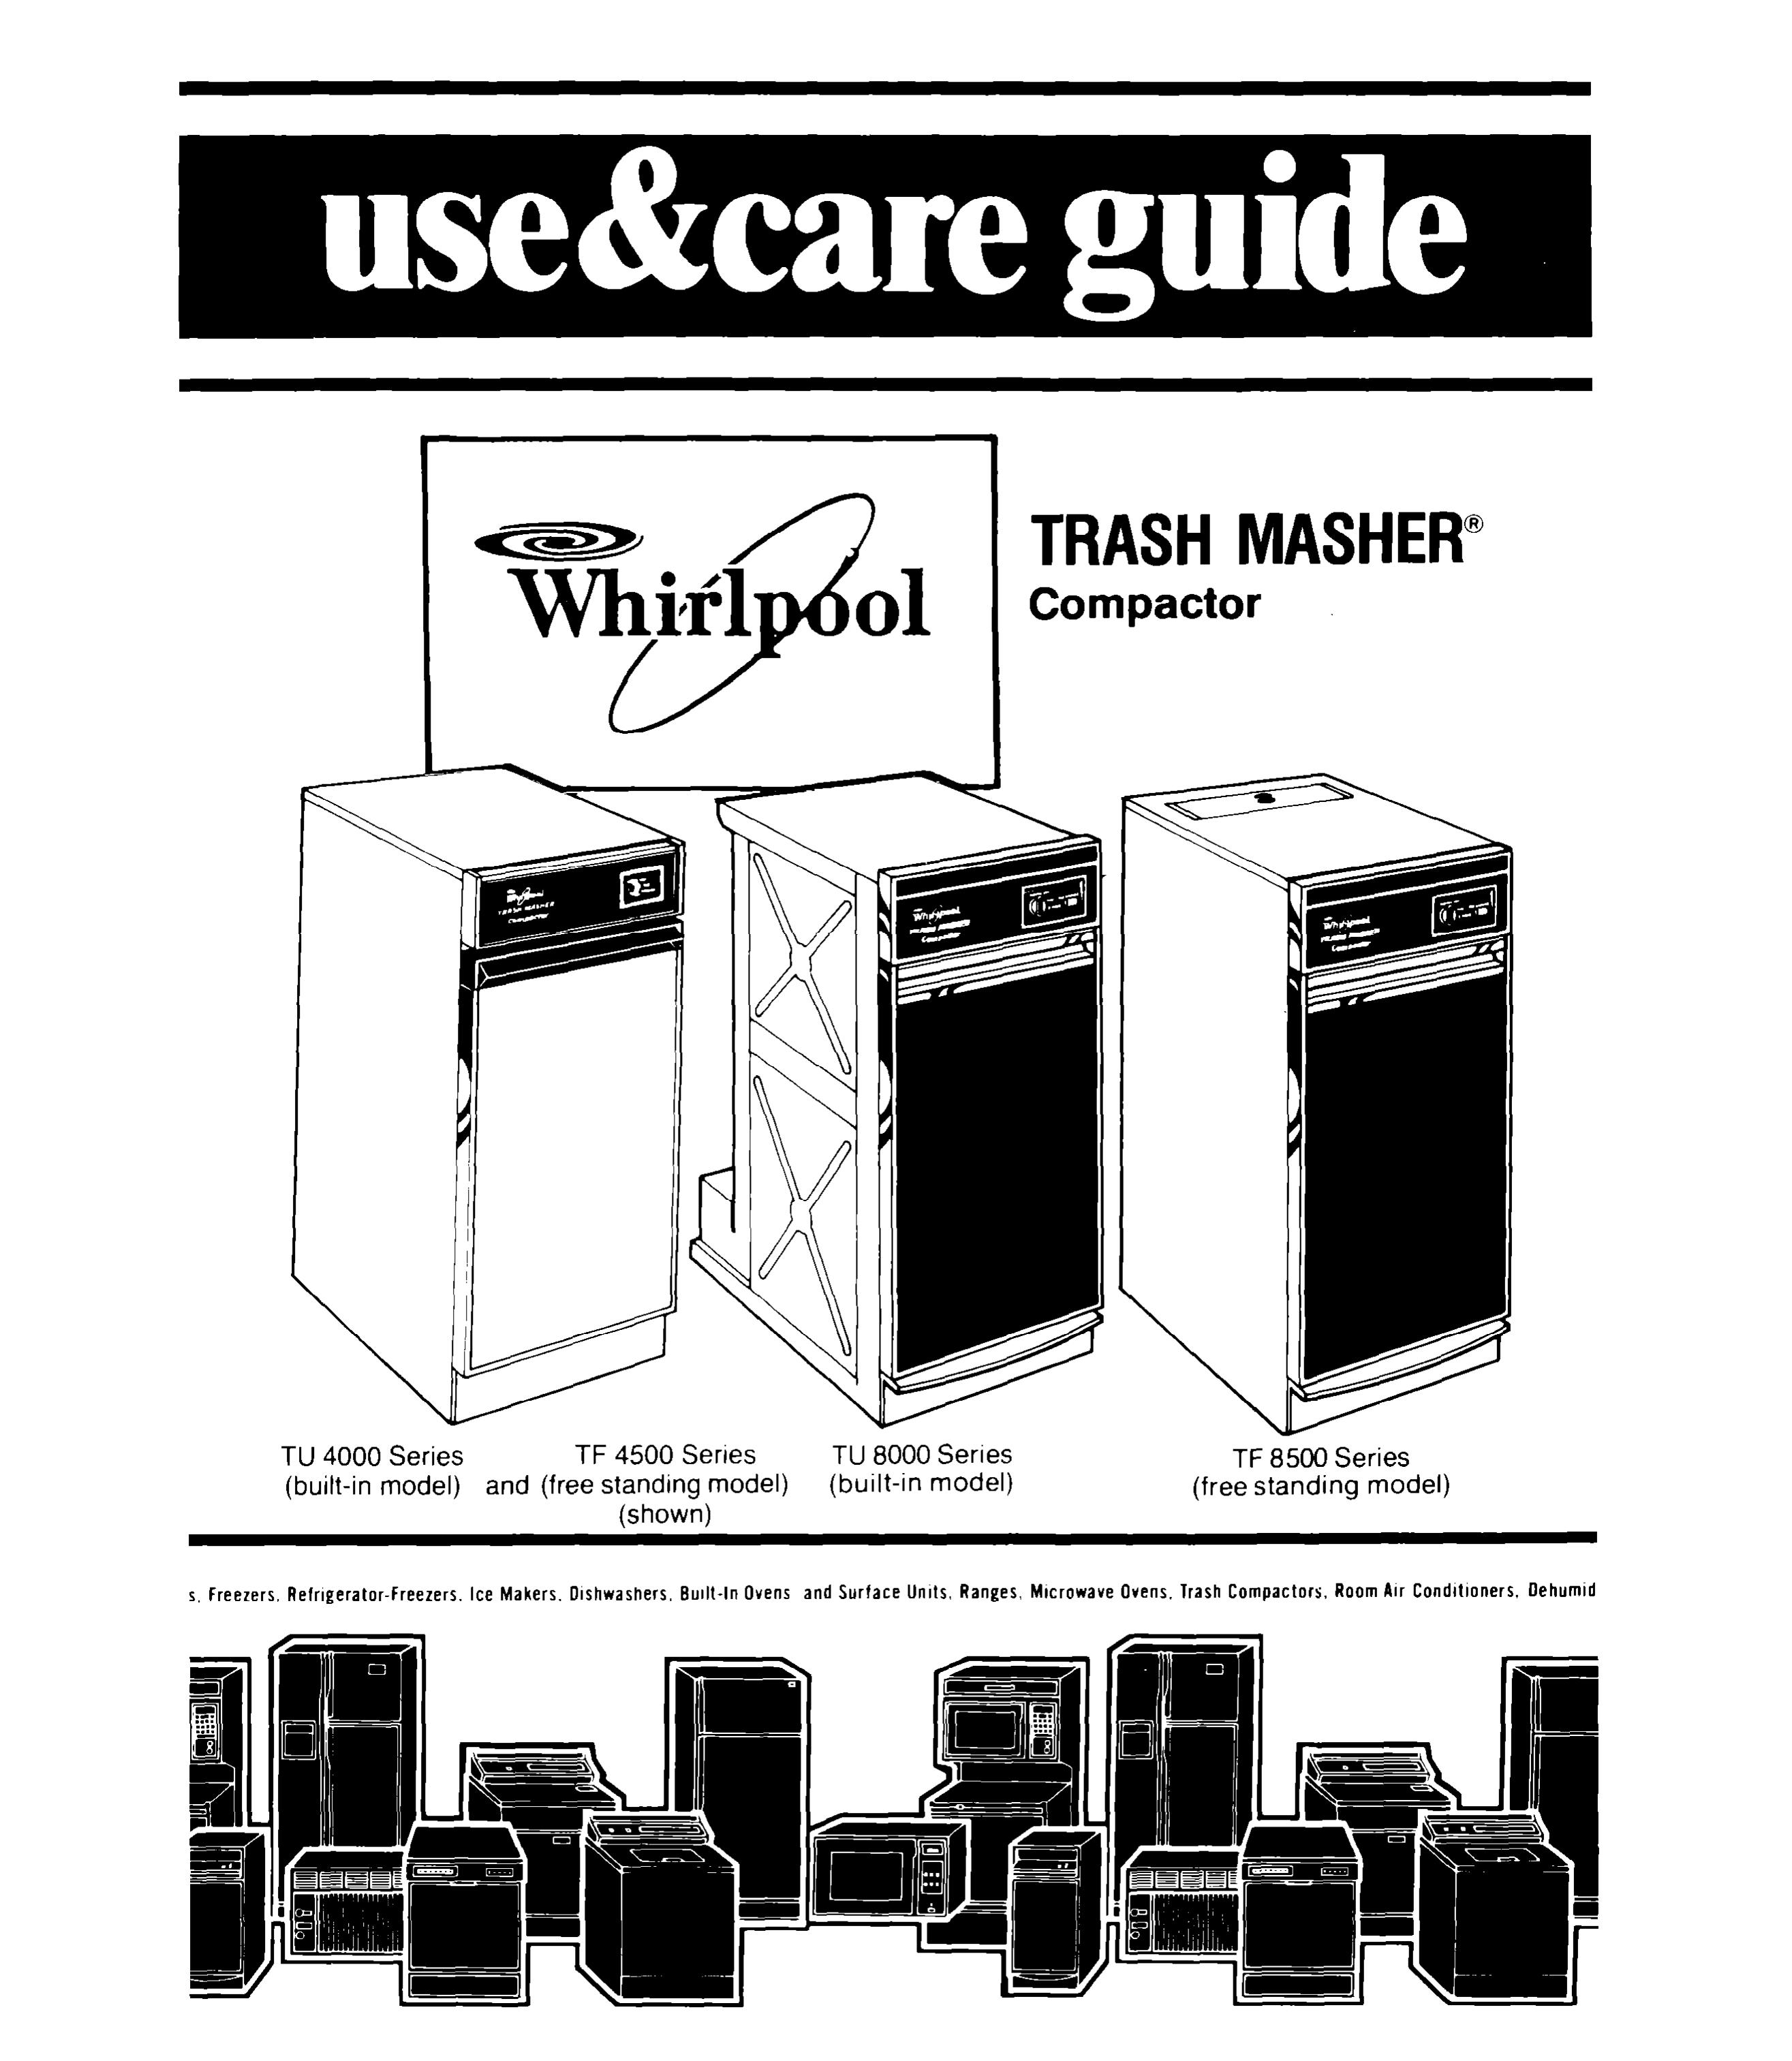 Whirlpool TU 8000 Series Trash Compactor User Manual